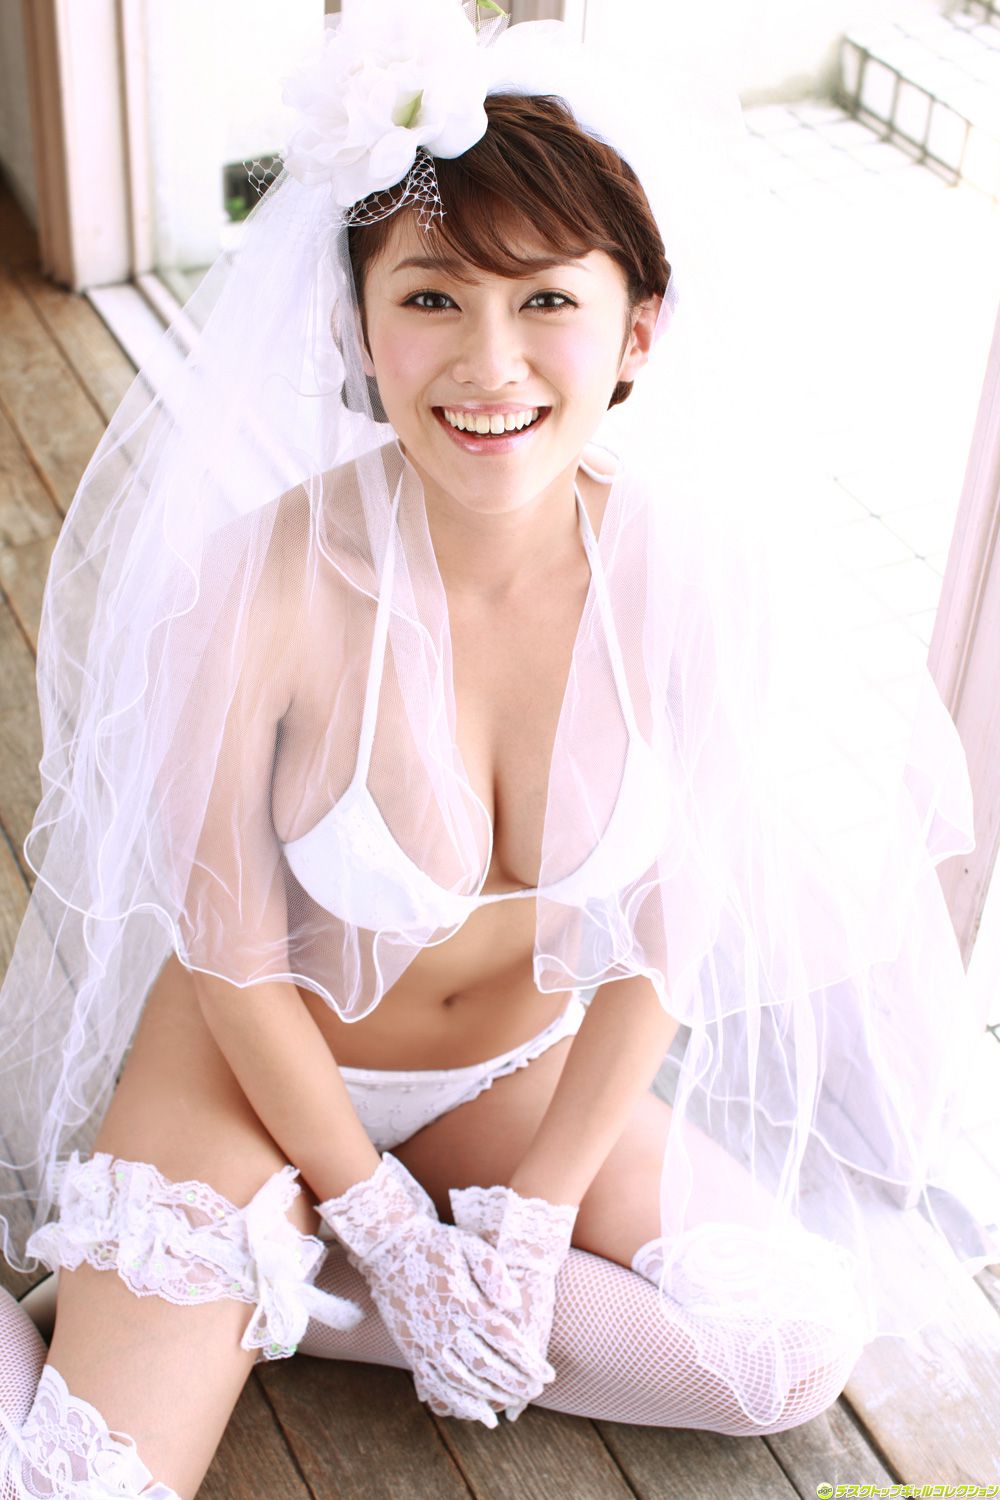 эротика японская невеста фото 58